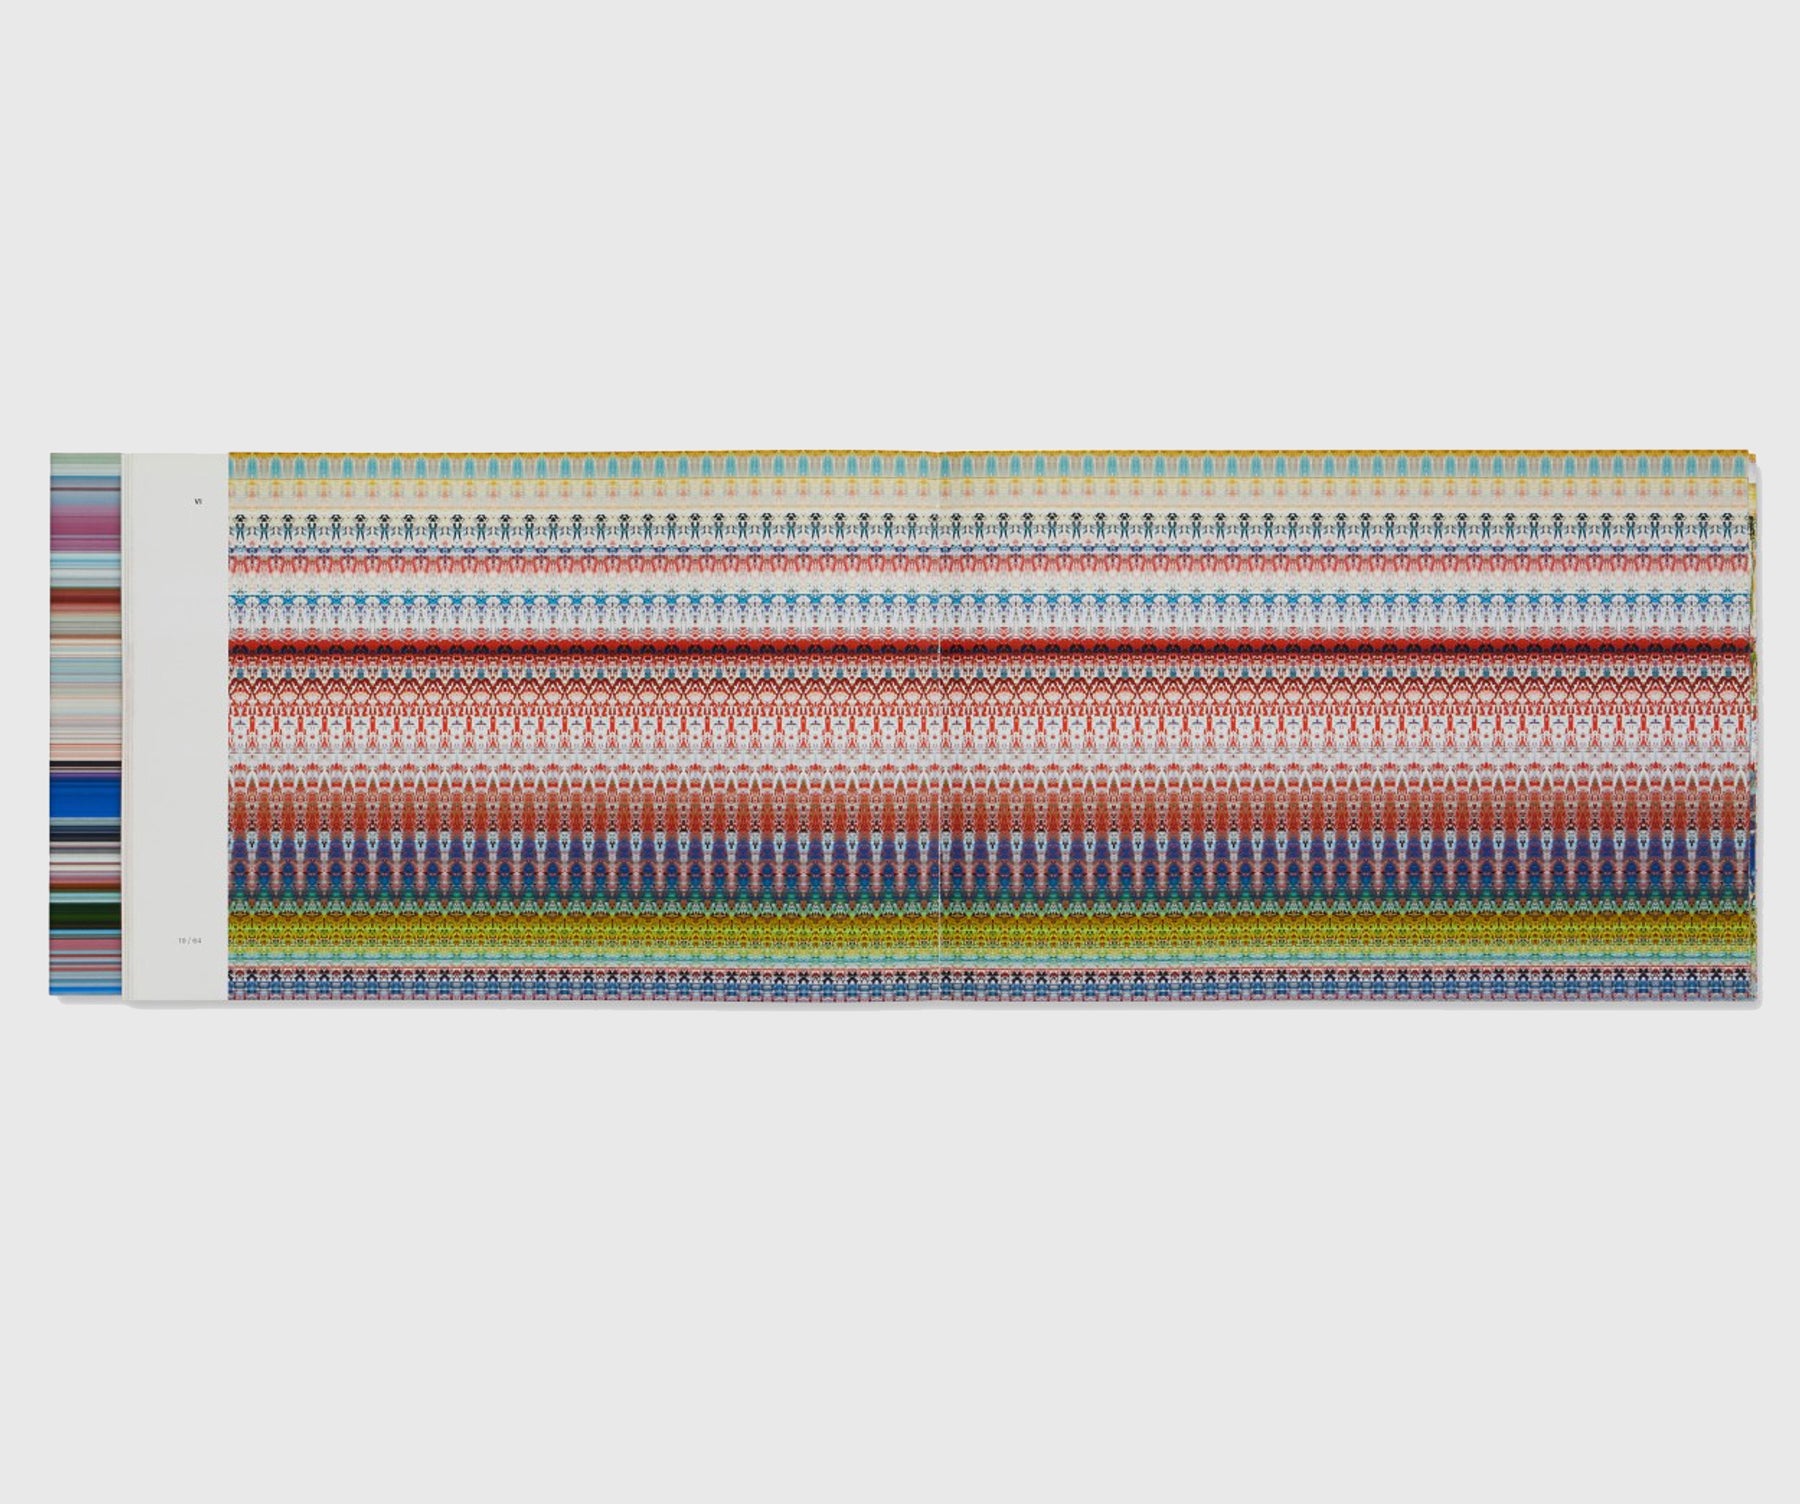 Gerhard Richter: Patterns – Marian Goodman Gallery